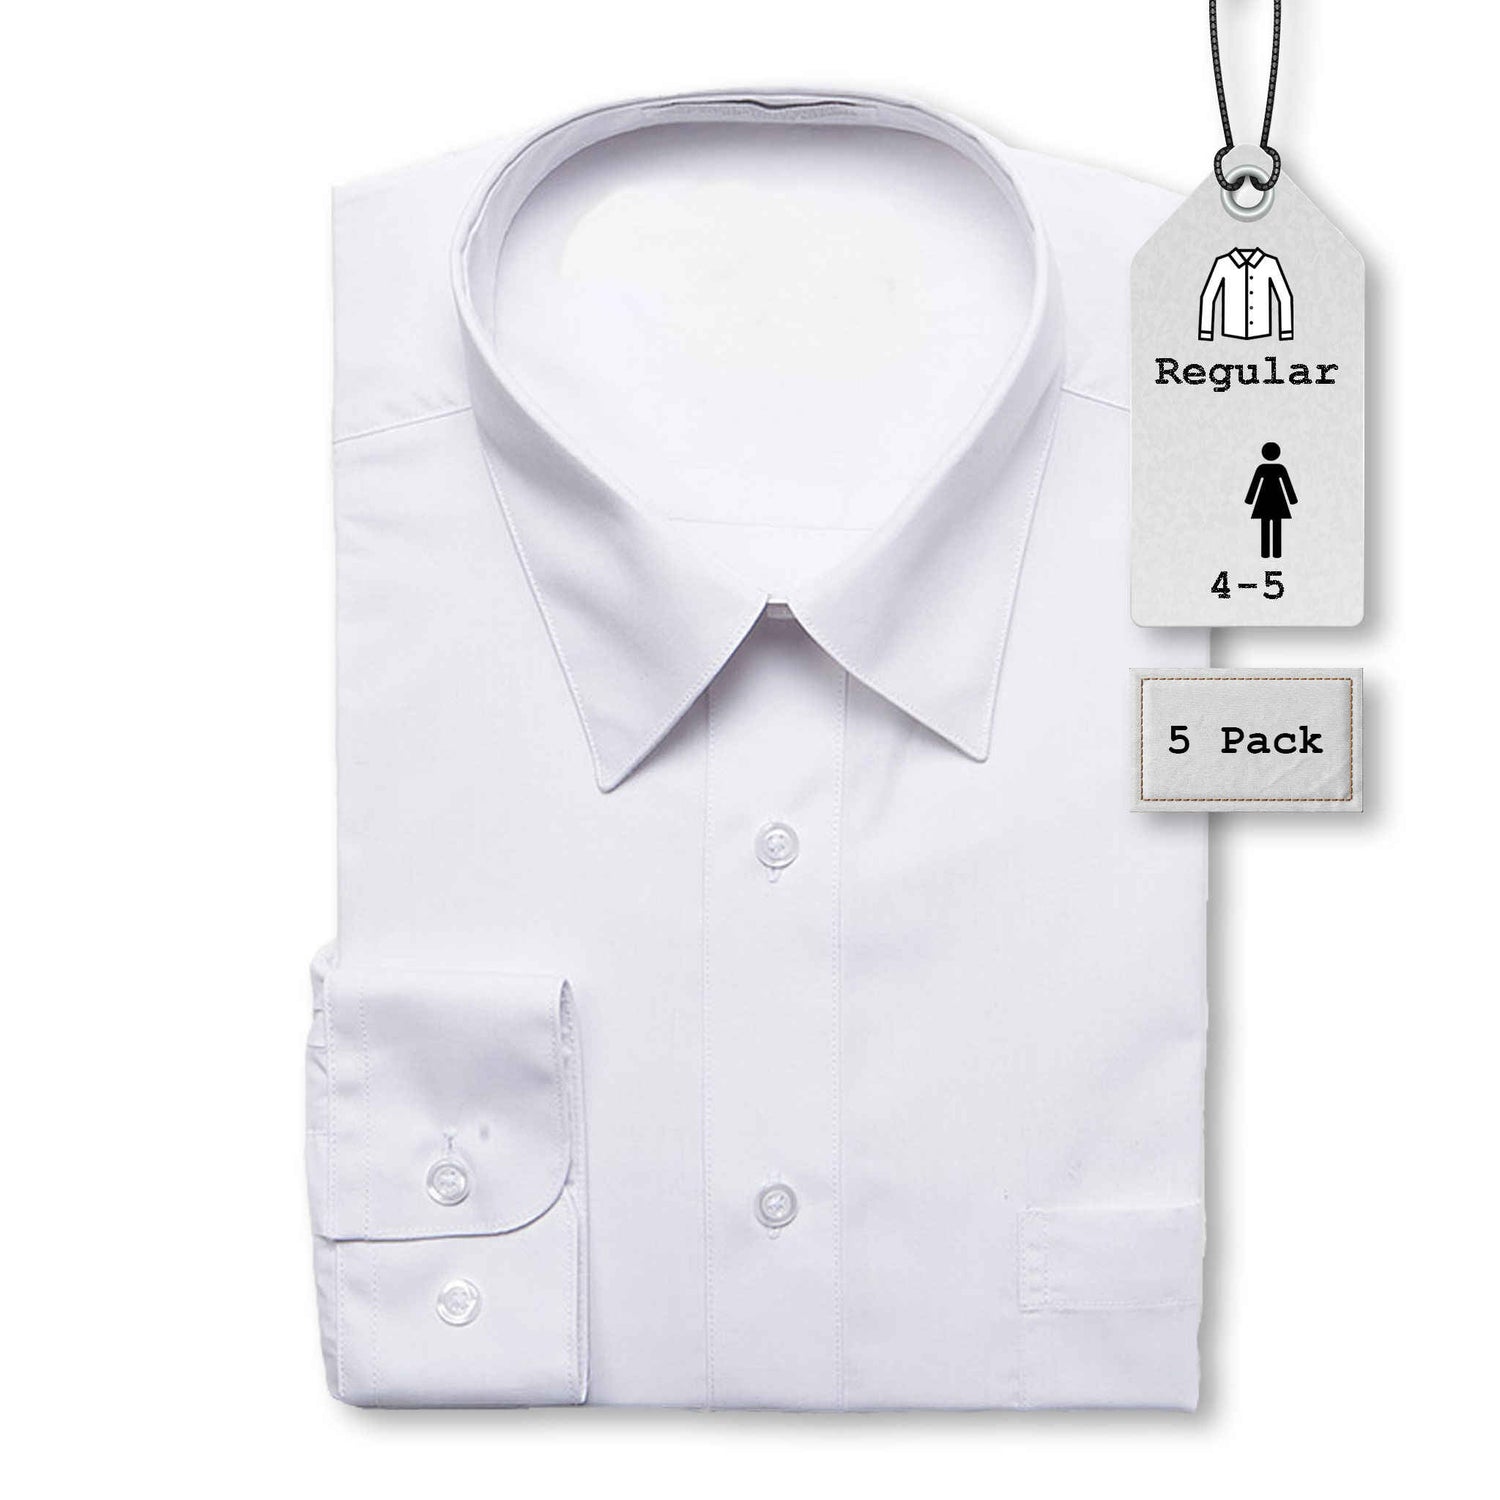 Girls Long Sleeve School Shirts | Regular Fit | White | 4-5 Years | 5 Pack